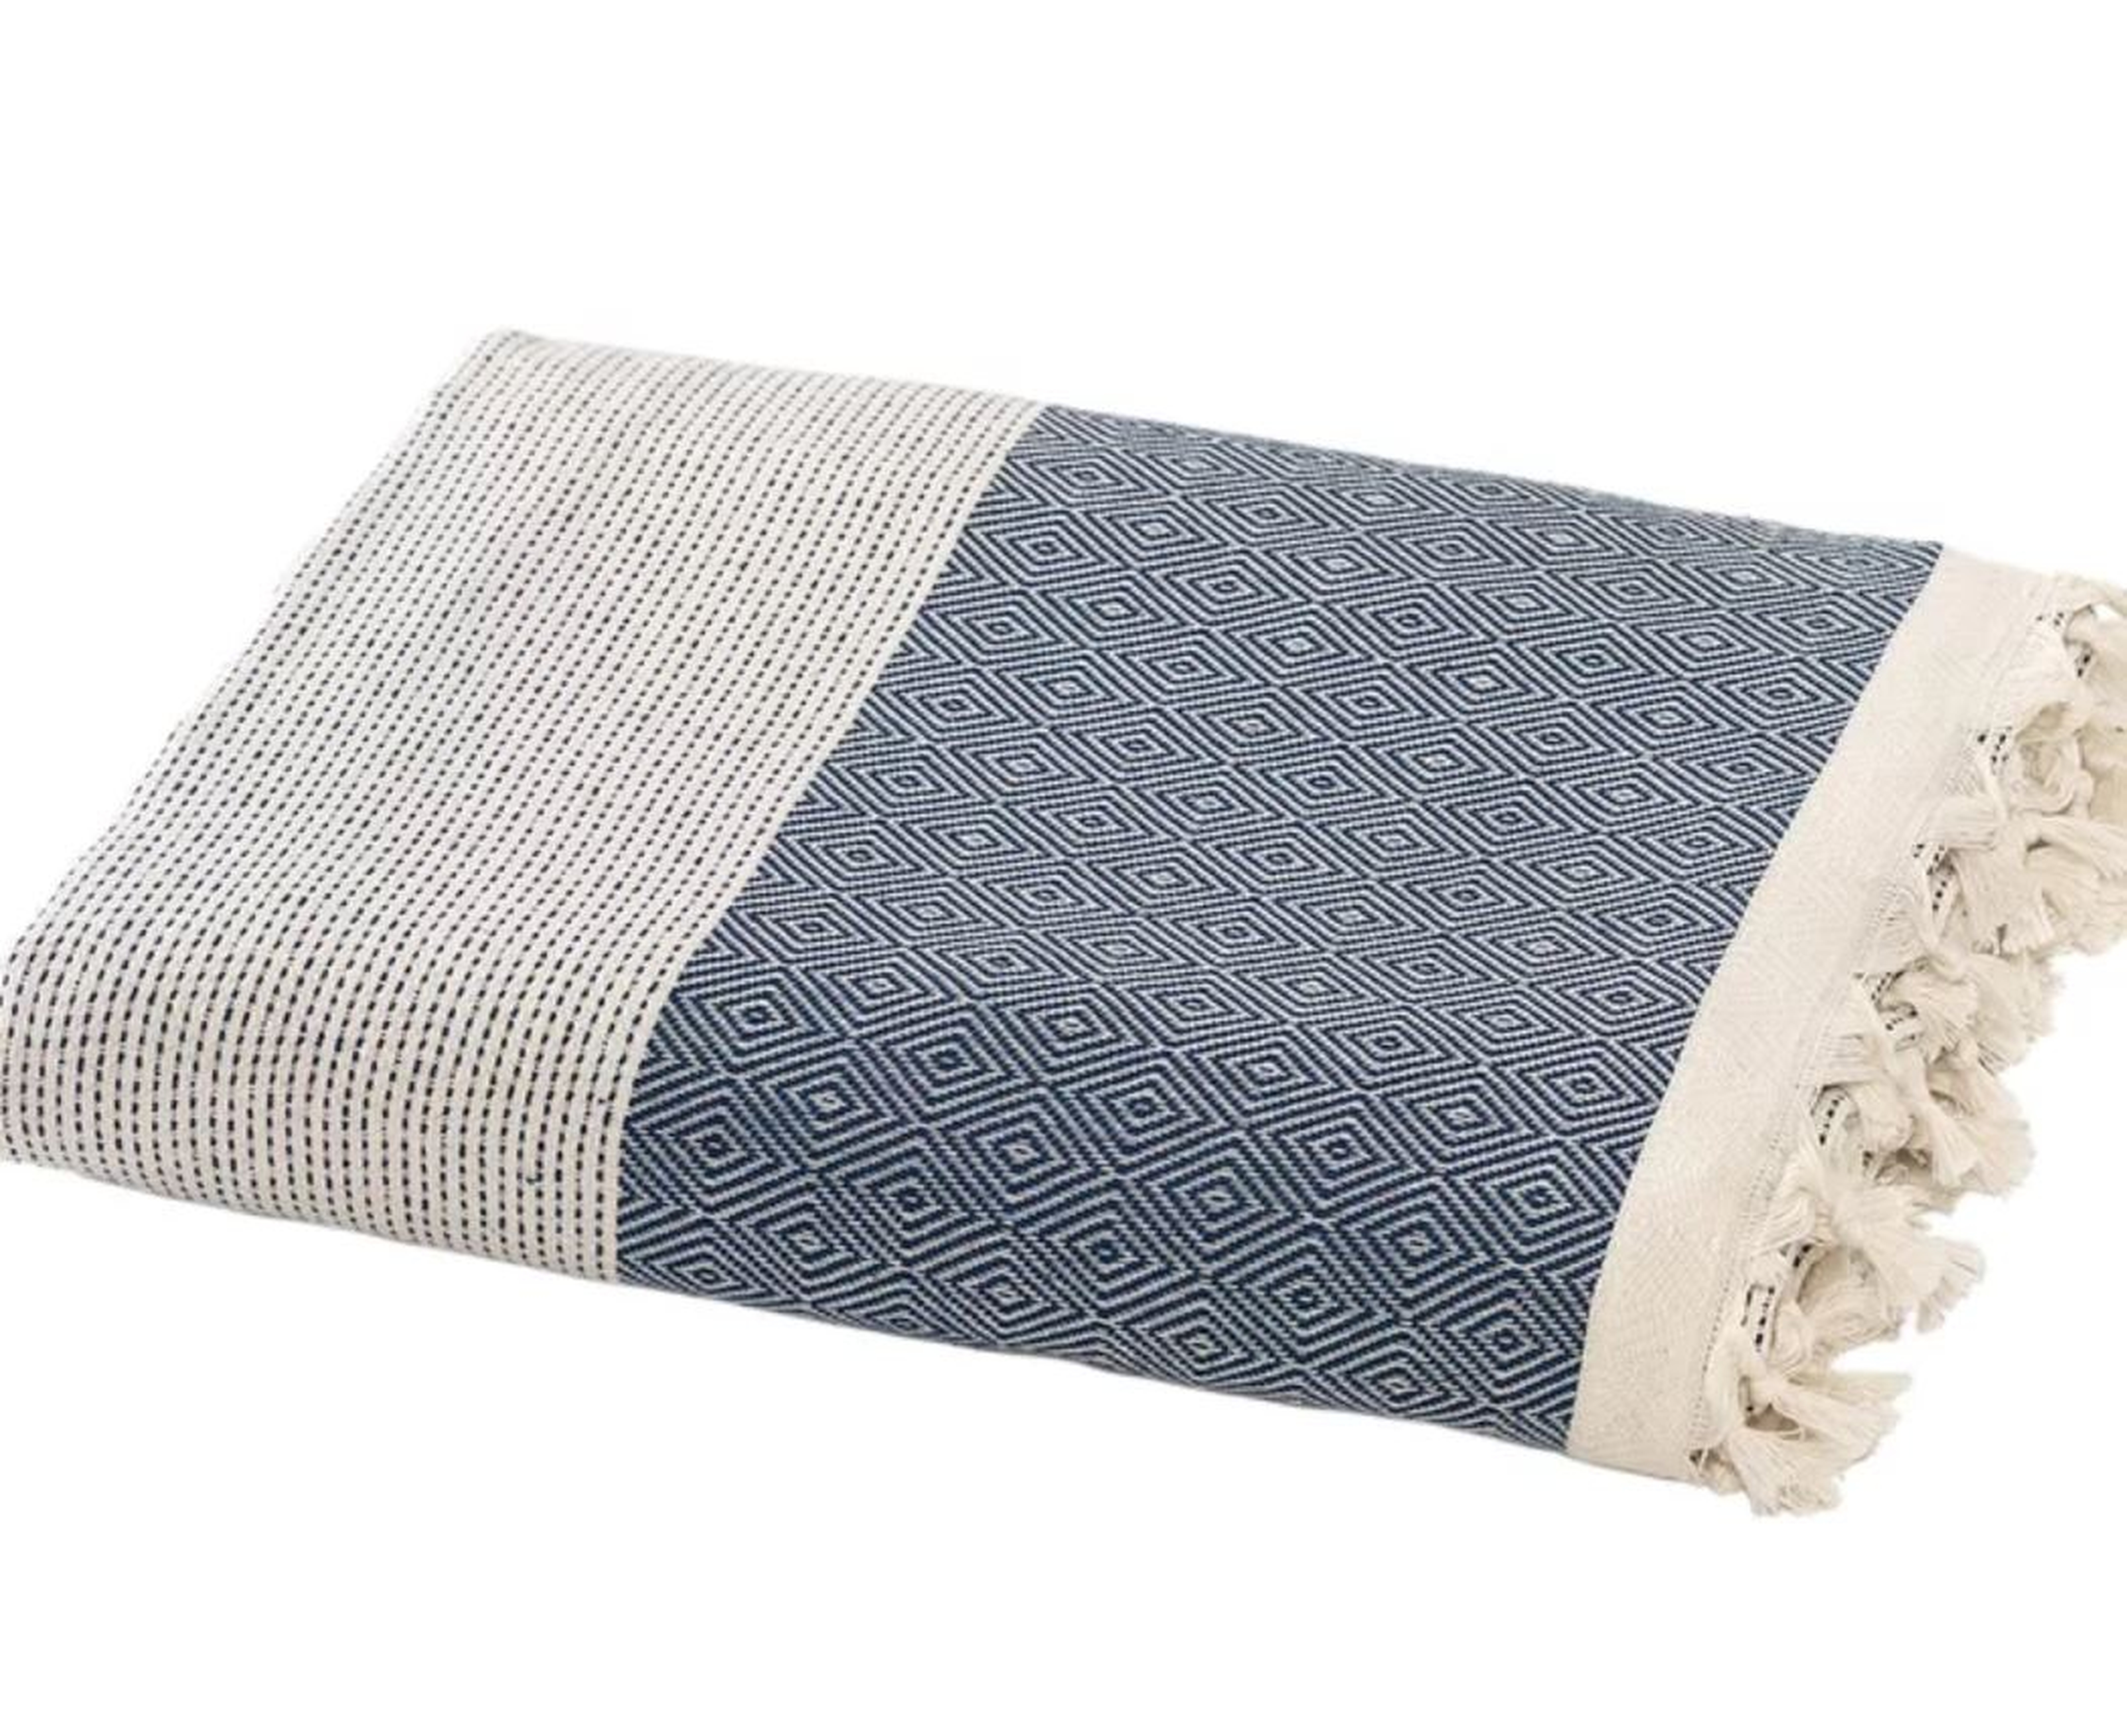 Aldo Turkish Cotton Throw Blanket -Blue - Wayfair